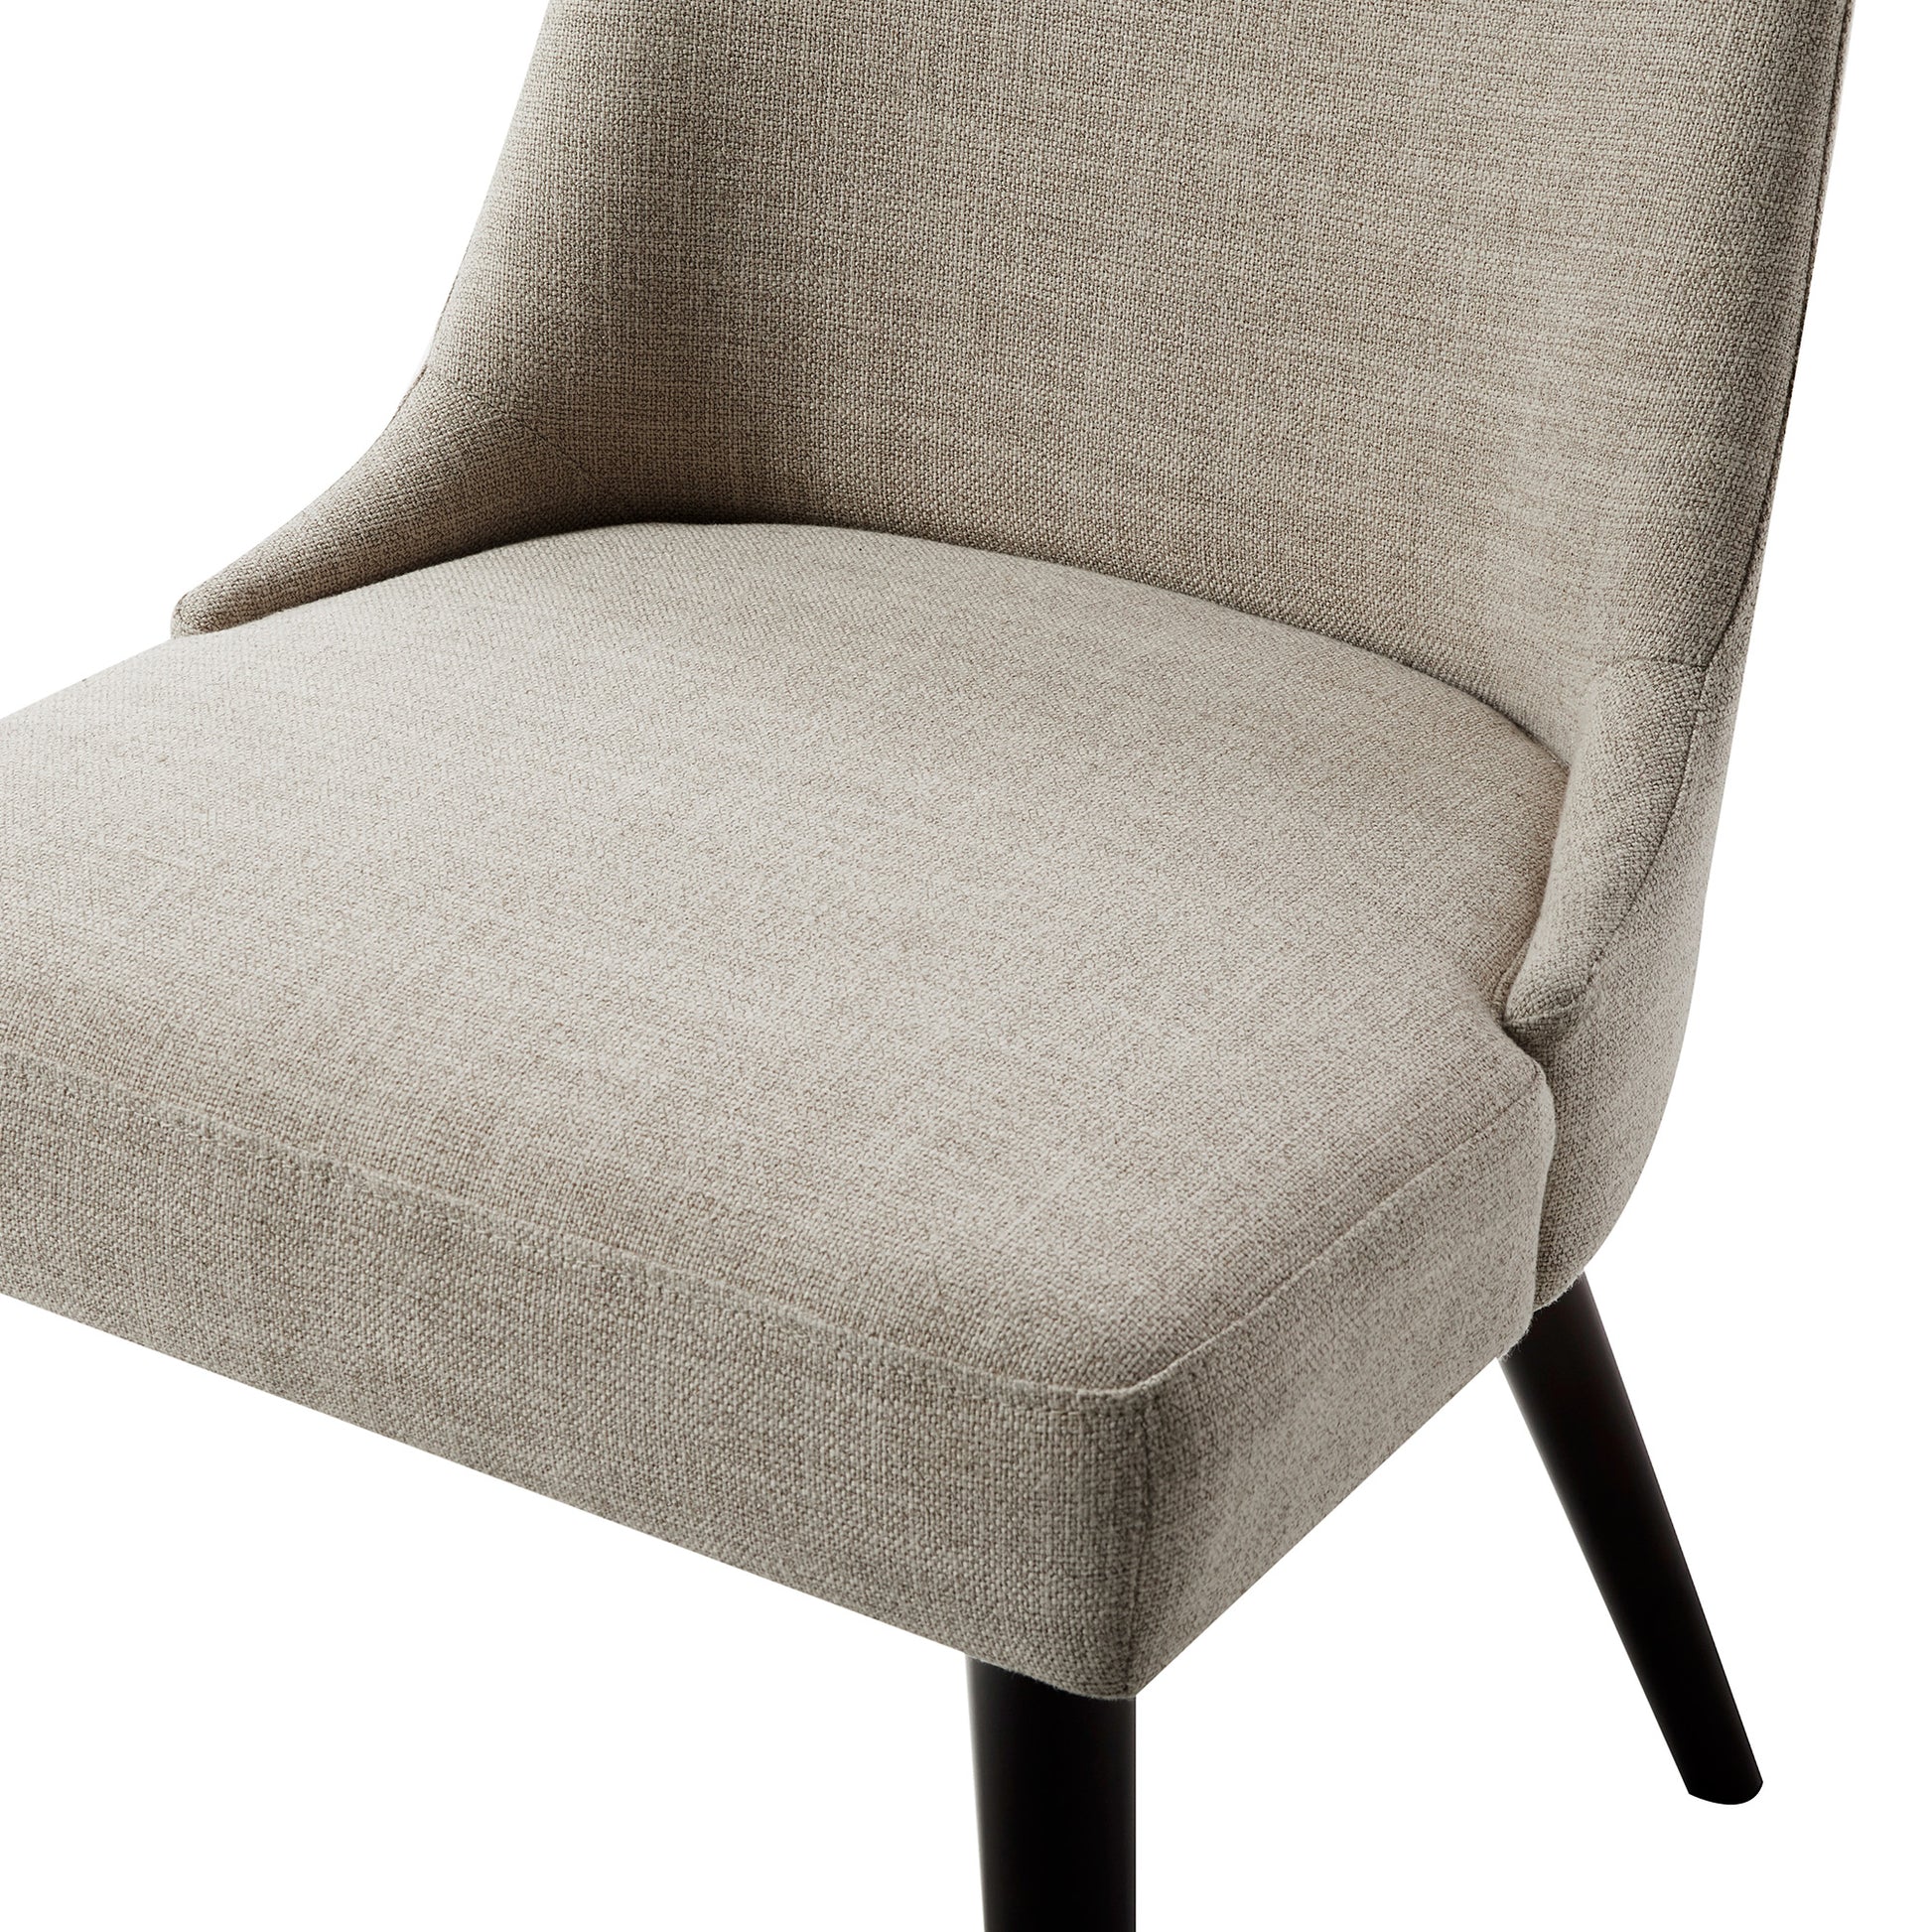 CHITA LIVING-Rhett Dining Chair (Set of 2)-Dining Chairs-Performance Fabric-Tan-